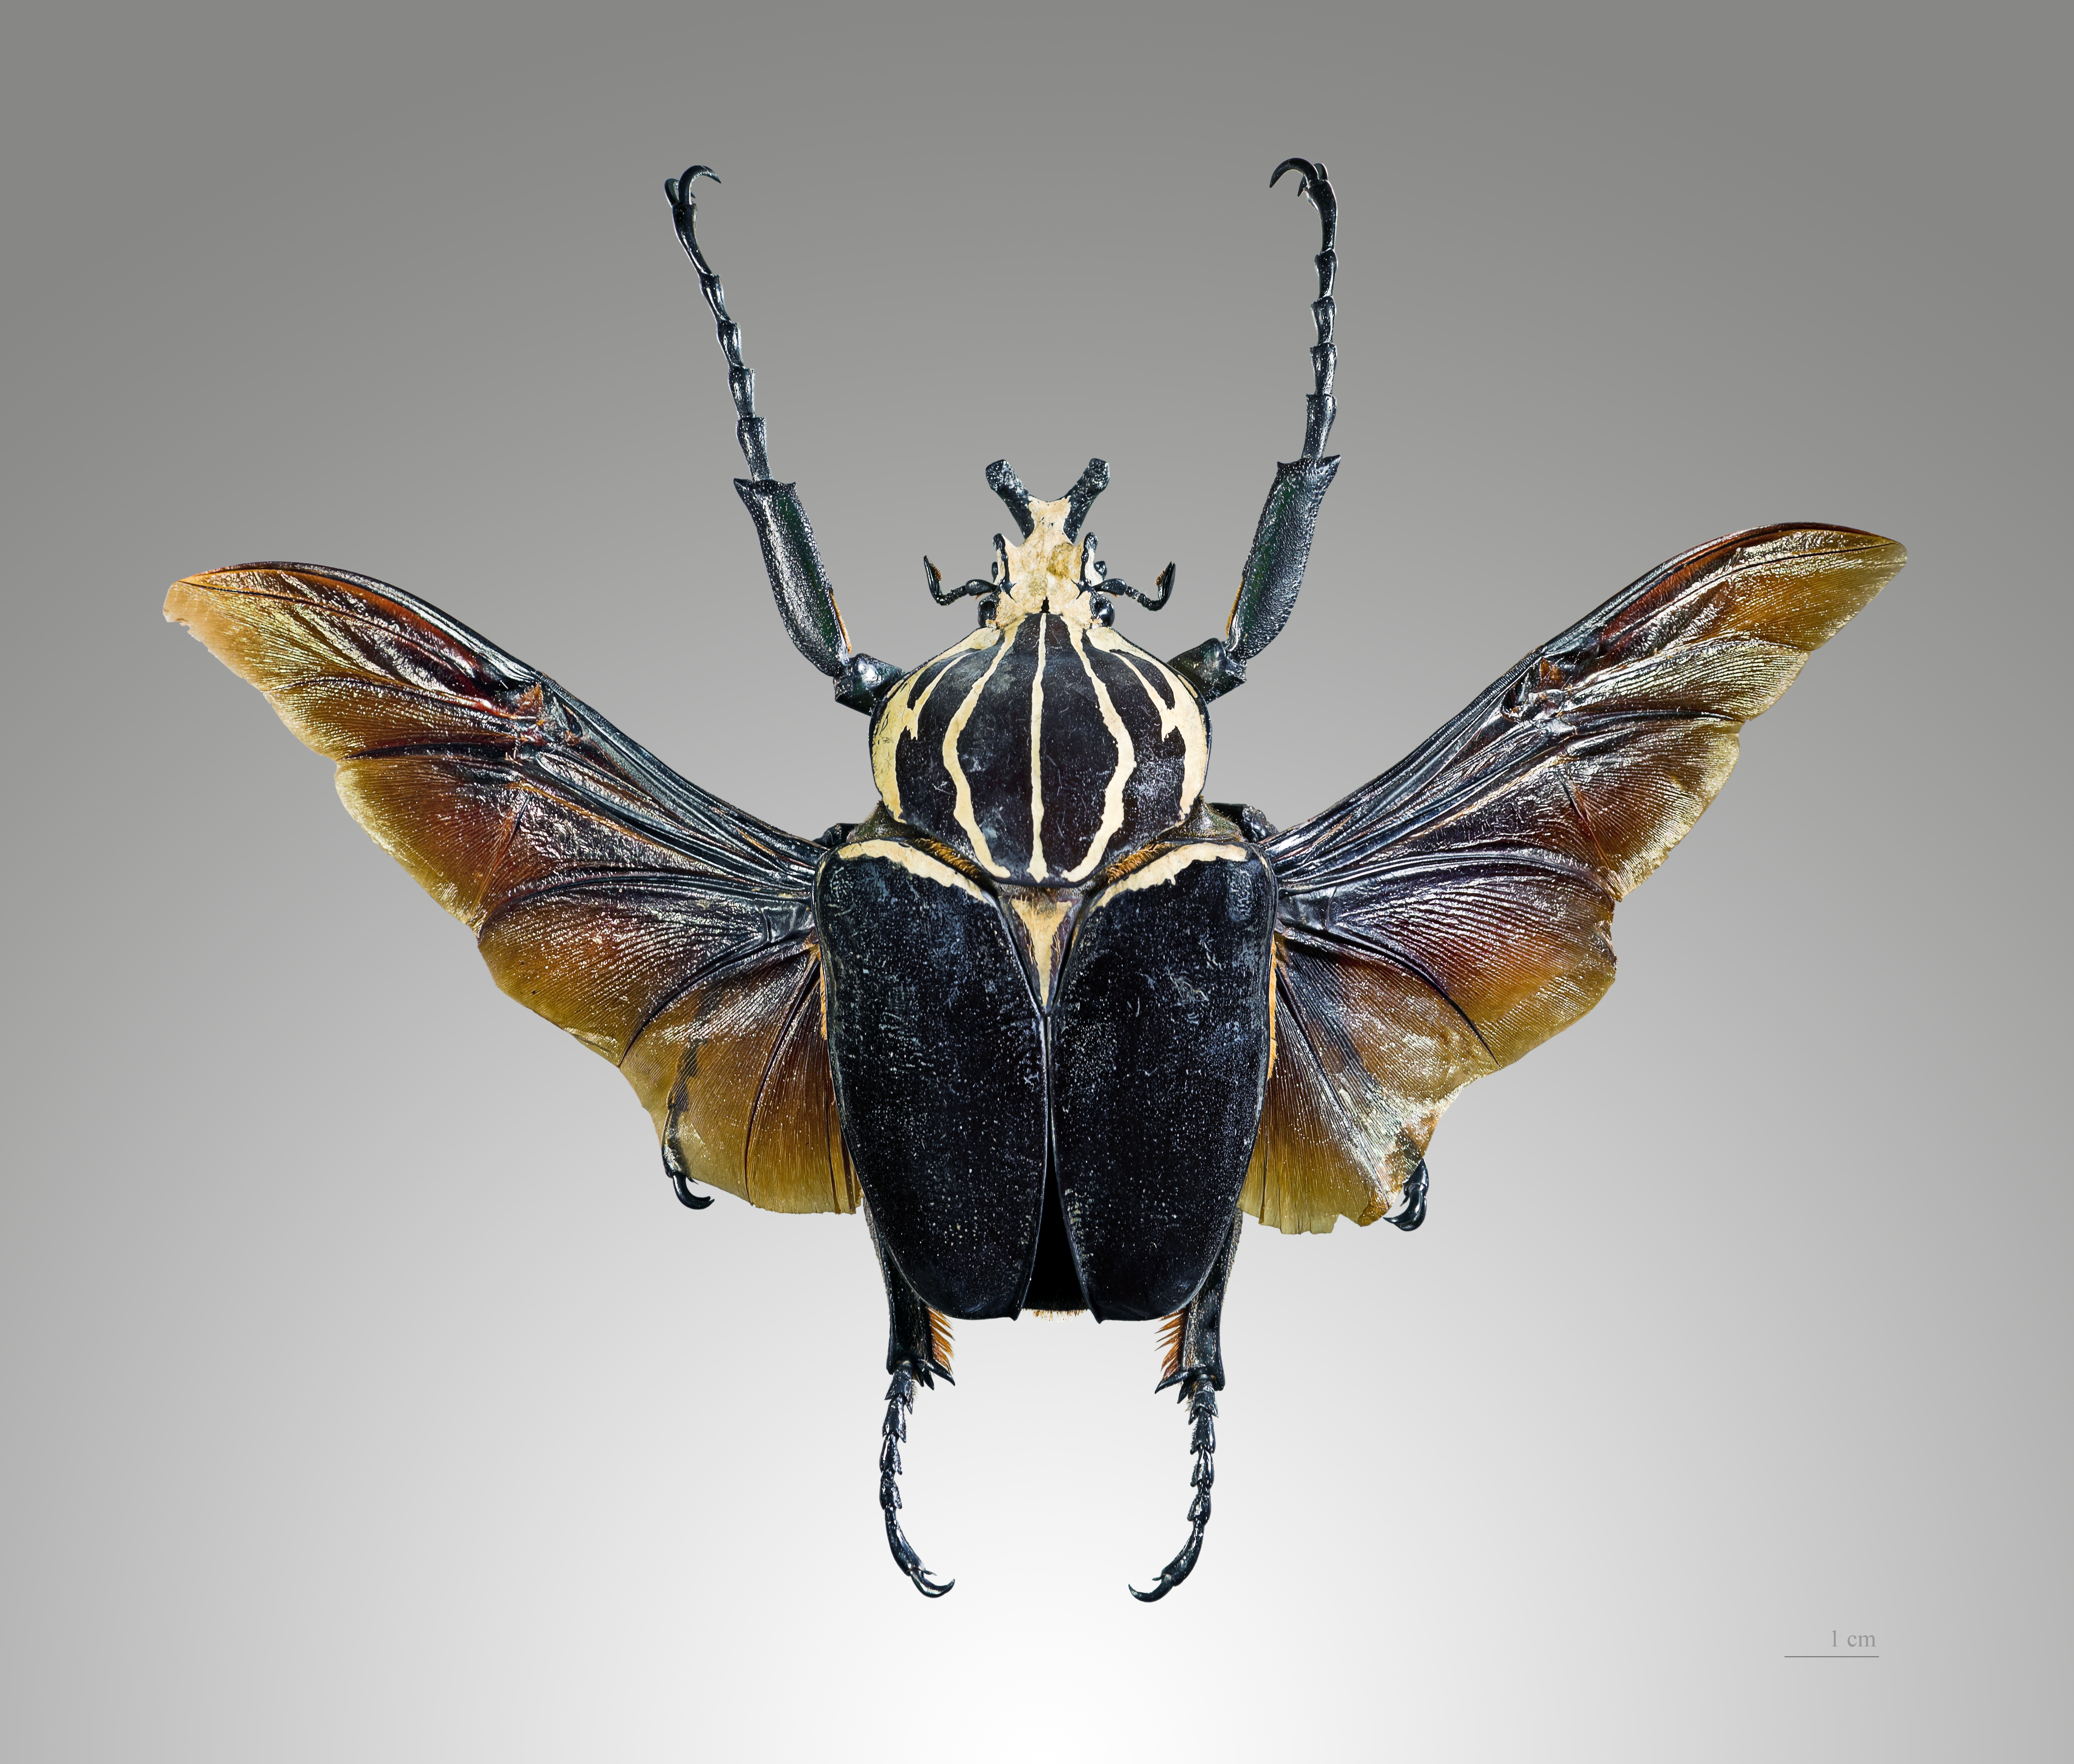 The African Goliath Beetle (Goliathus goliatus)